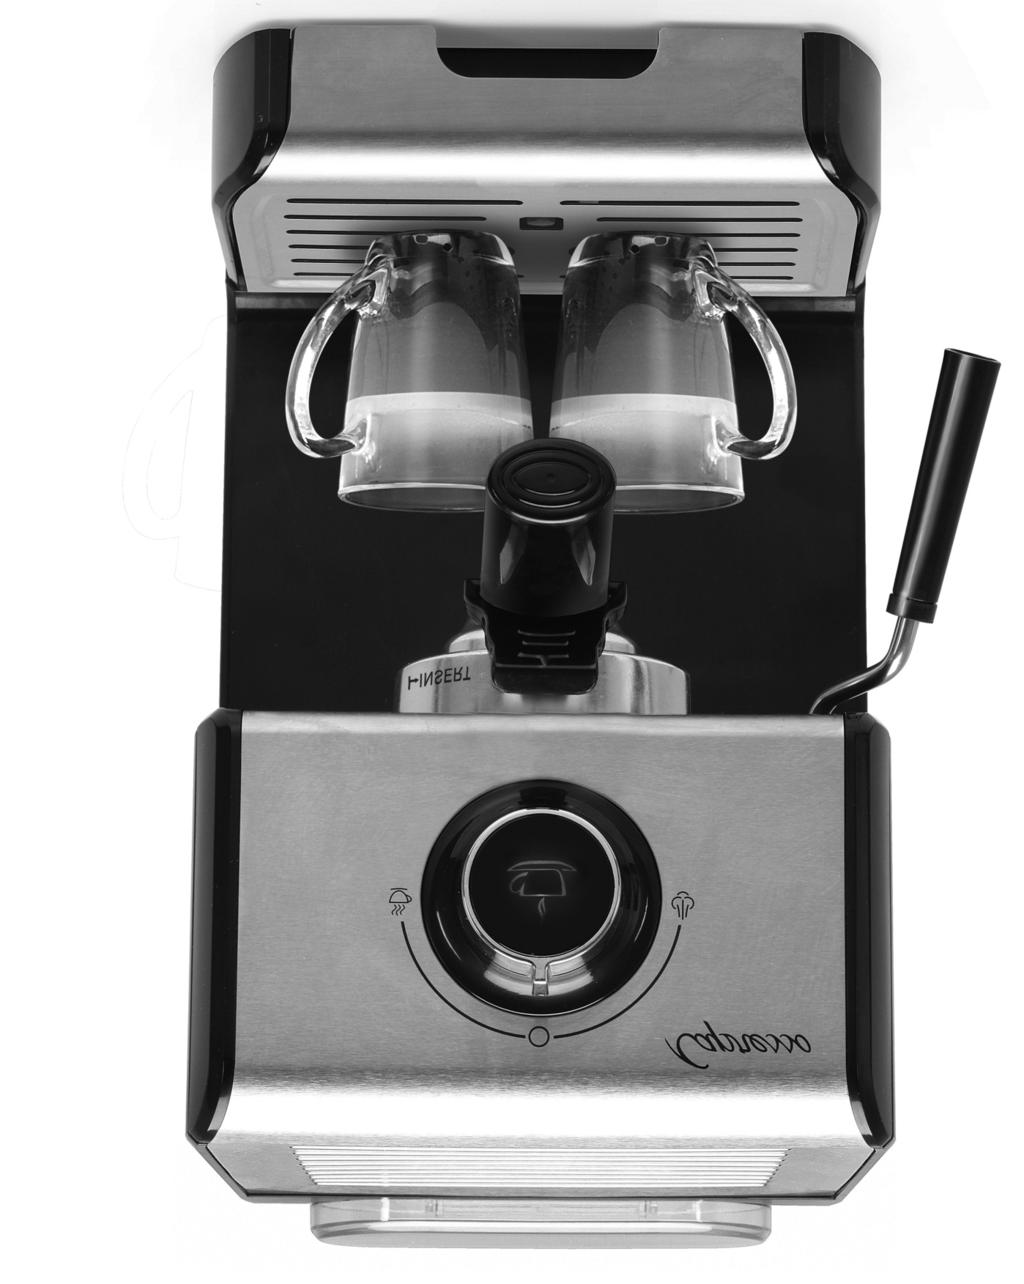 EC3OO Espresso & Cappuccino Machine Model #123.